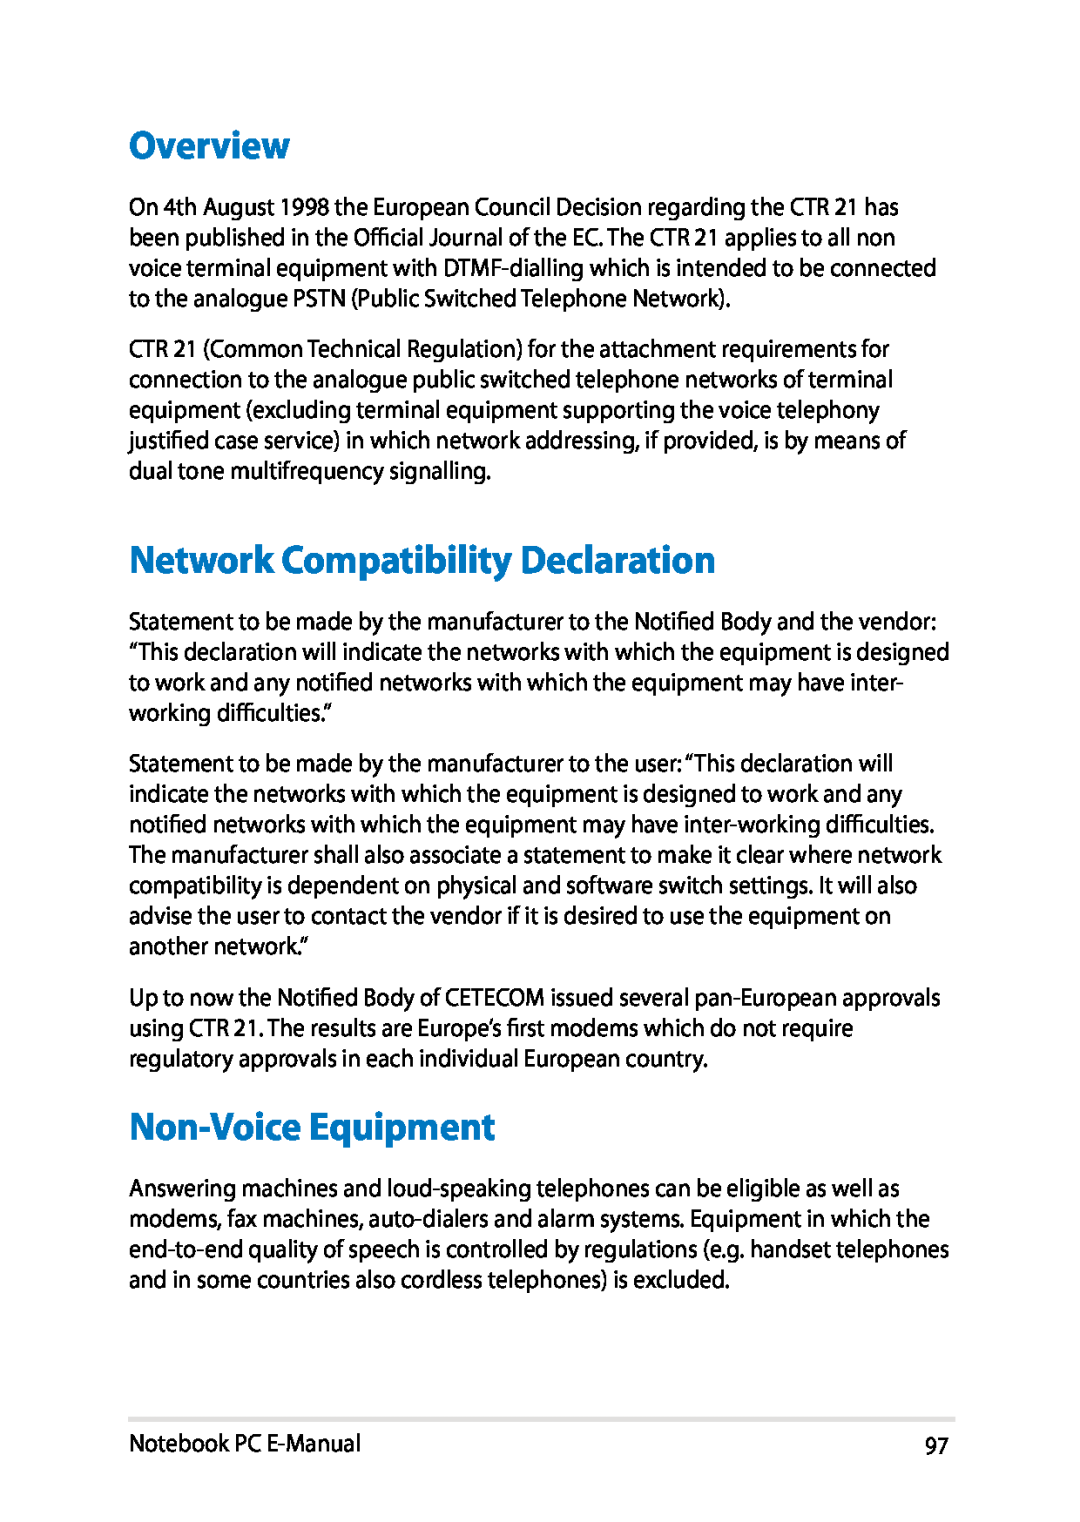 Asus E8438 manual Overview, Network Compatibility Declaration, Non-Voice Equipment 